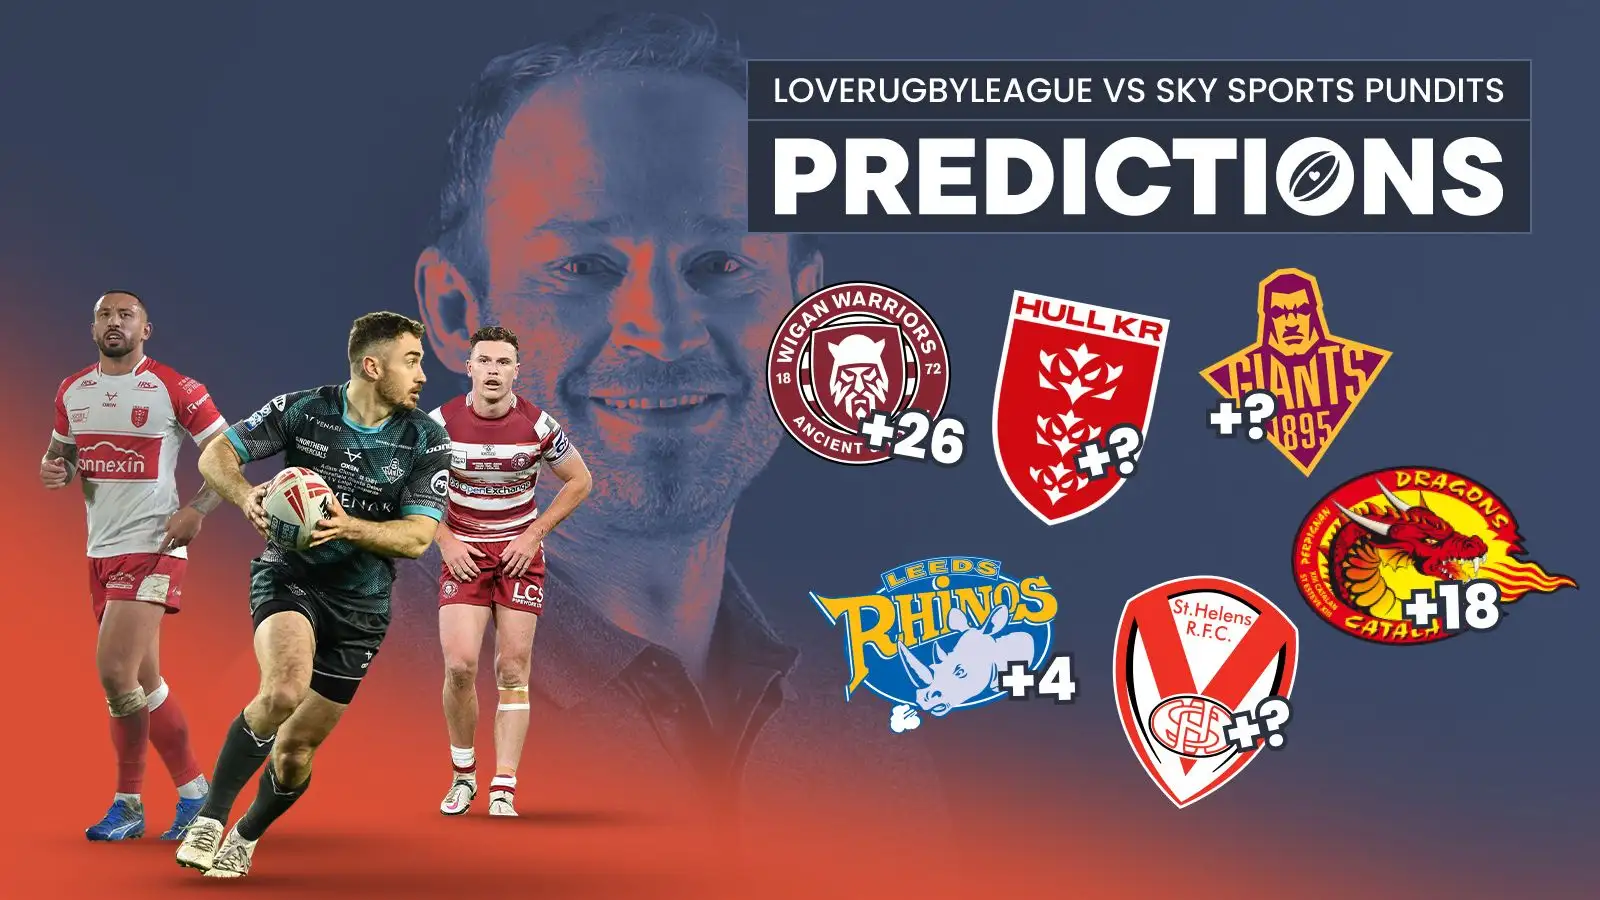 Super League Round 4 predictions: Love Rugby League vs Sky Sports pundit Jon Wells